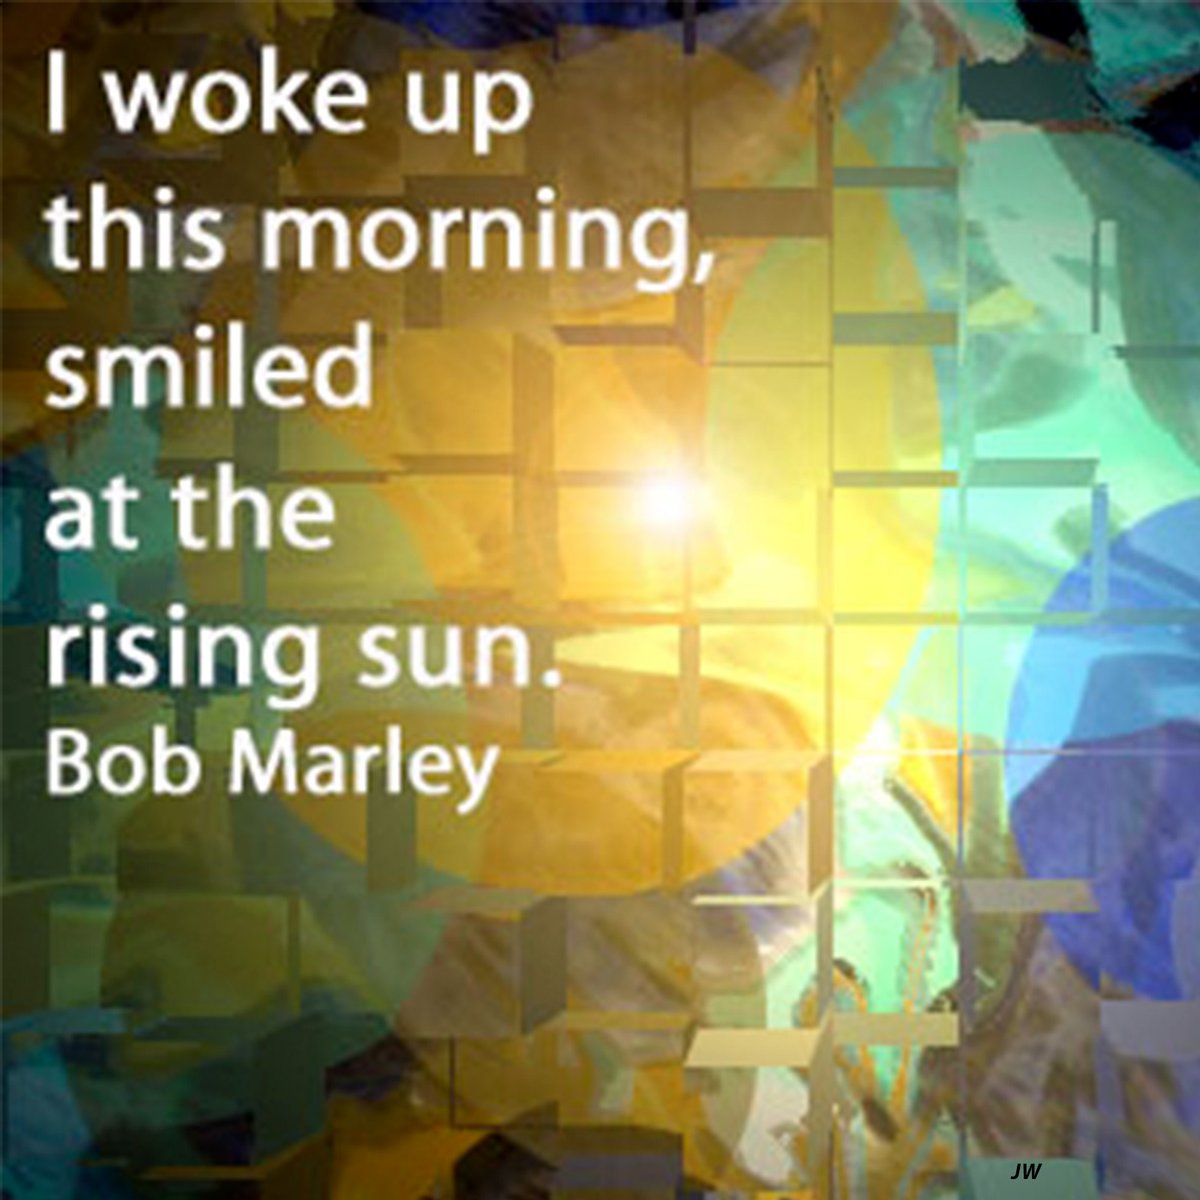 'Smile'
#art #smile #sun #morning #marley #dailyart #fridayart #recycledart #collage #statementart #rising #abstract #artforinstagram #artist #creative #quote #beautiful #earth #janicewilliamsart
artstudio99.com